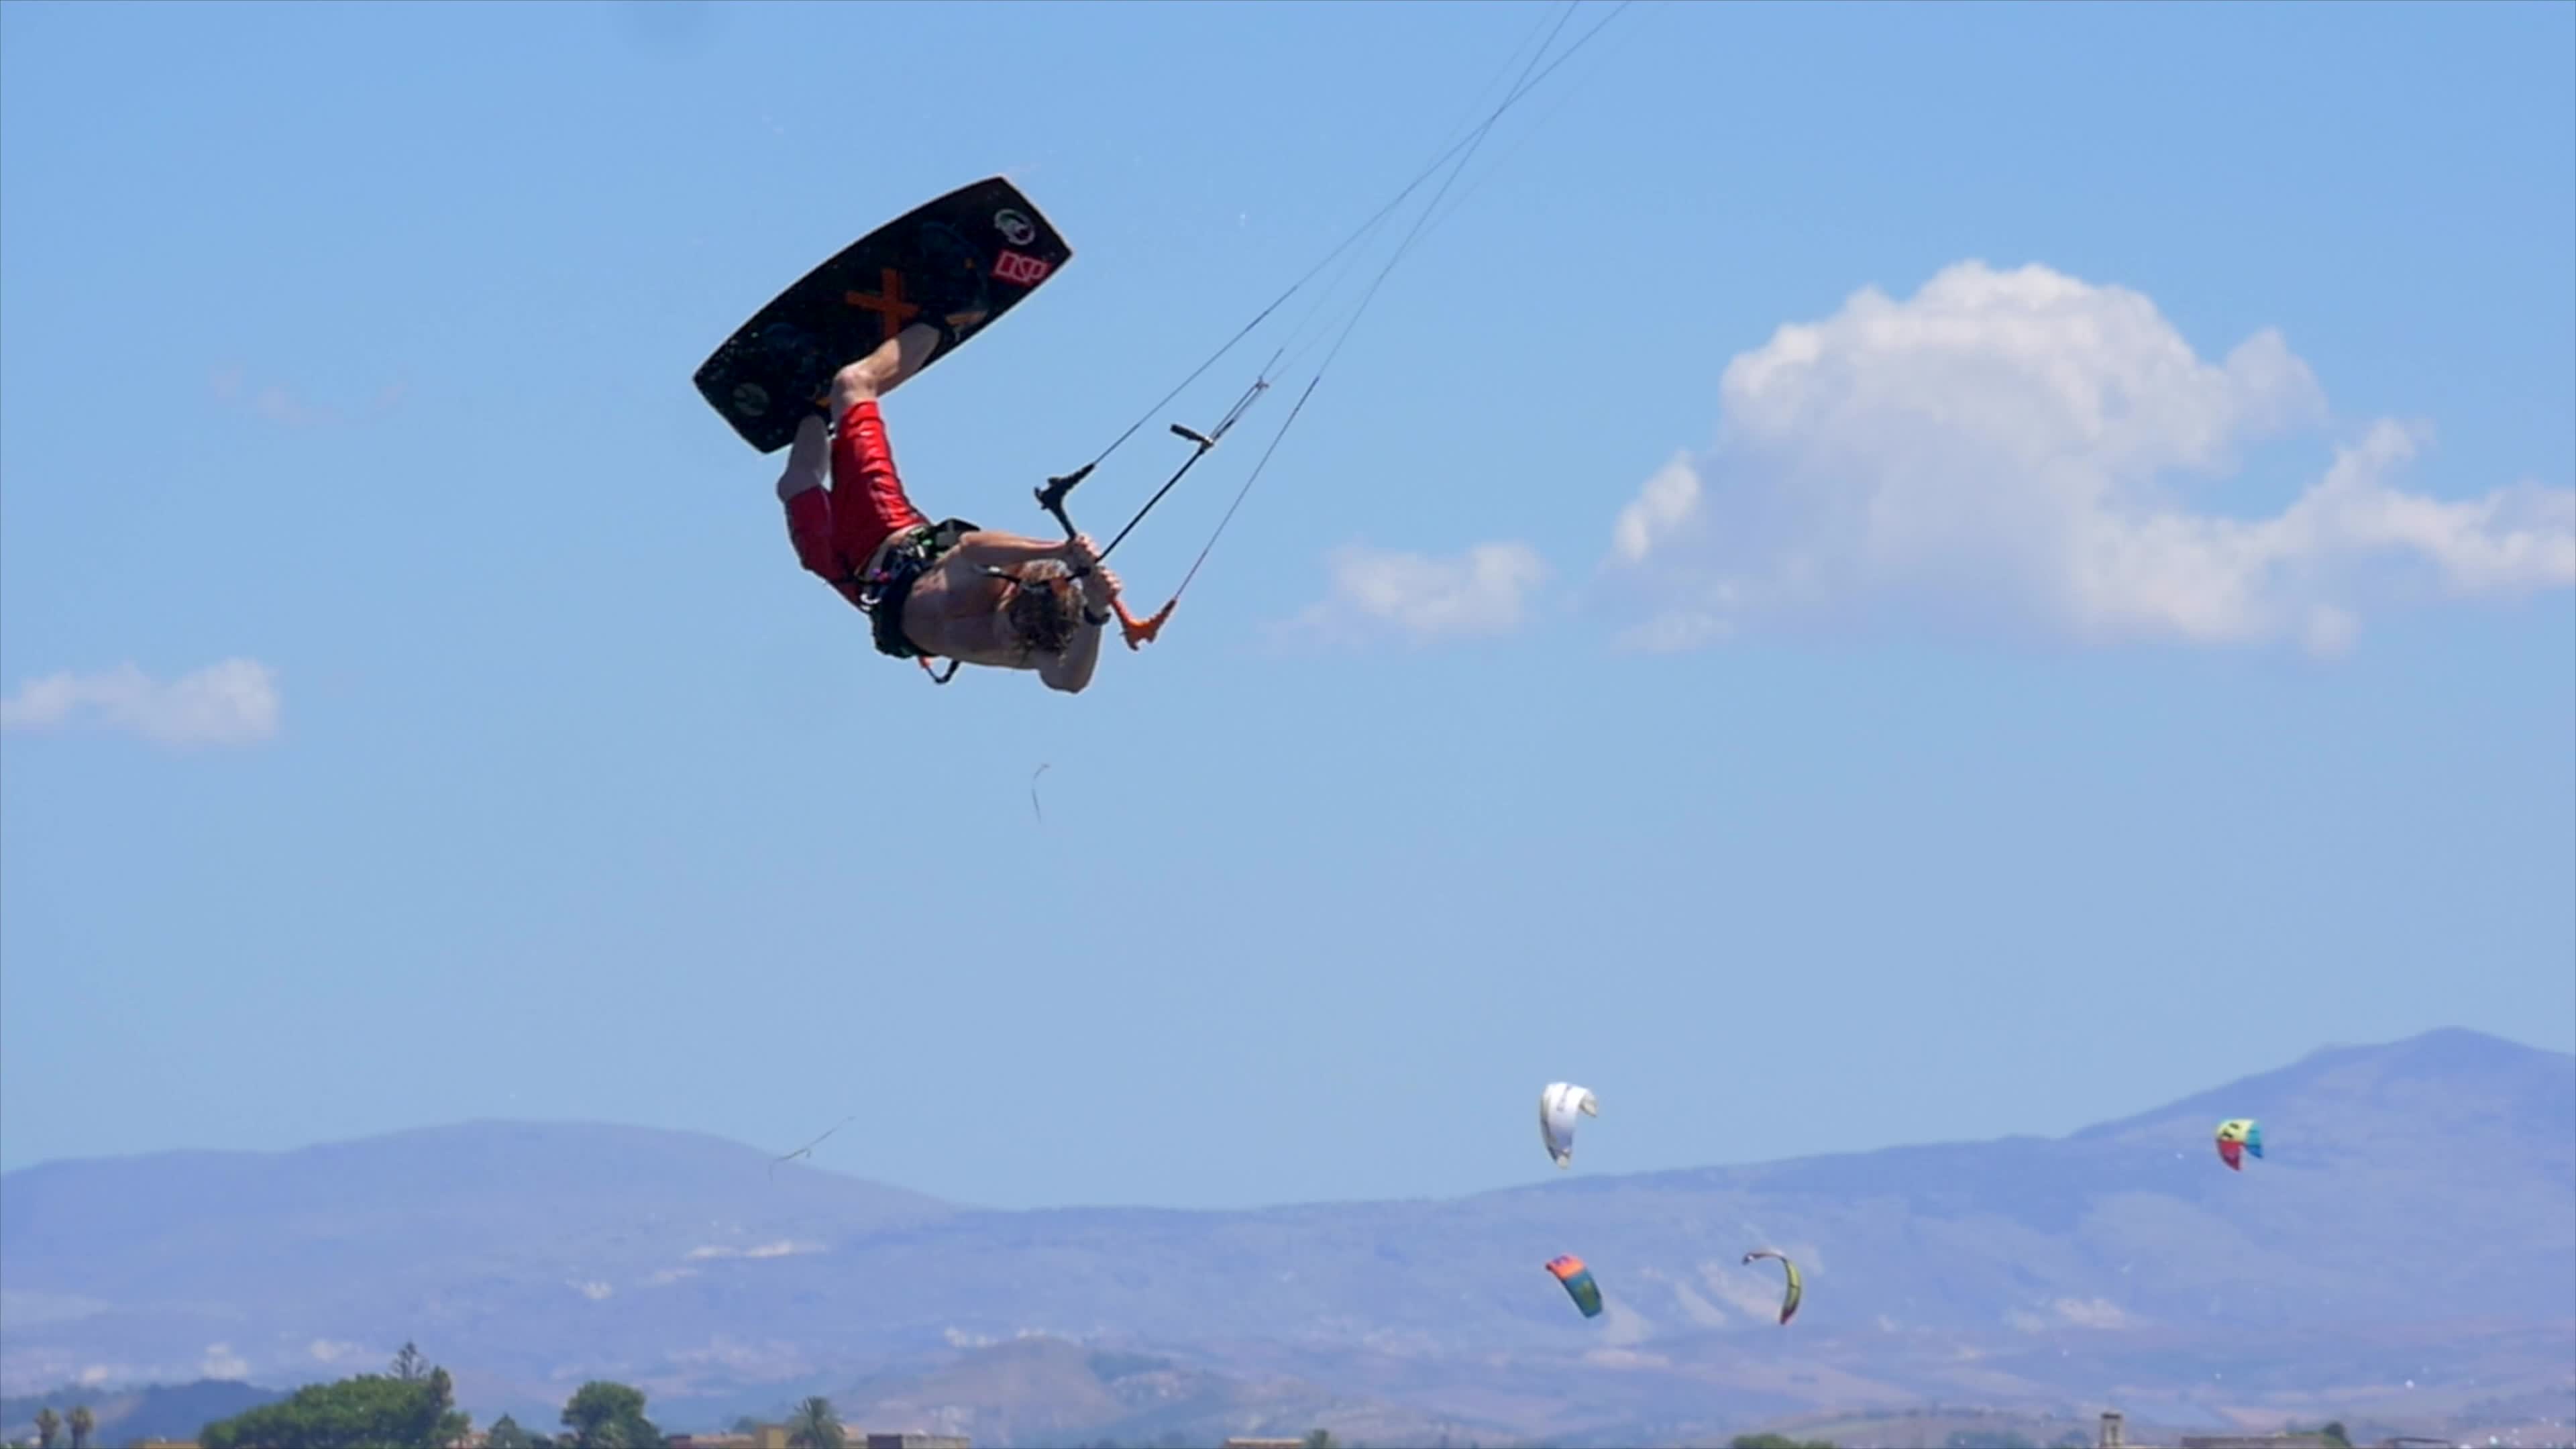 Kiteboarding: The art of jumping, Kiteboard, Loop, Kite basics. 3840x2160 4K Wallpaper.